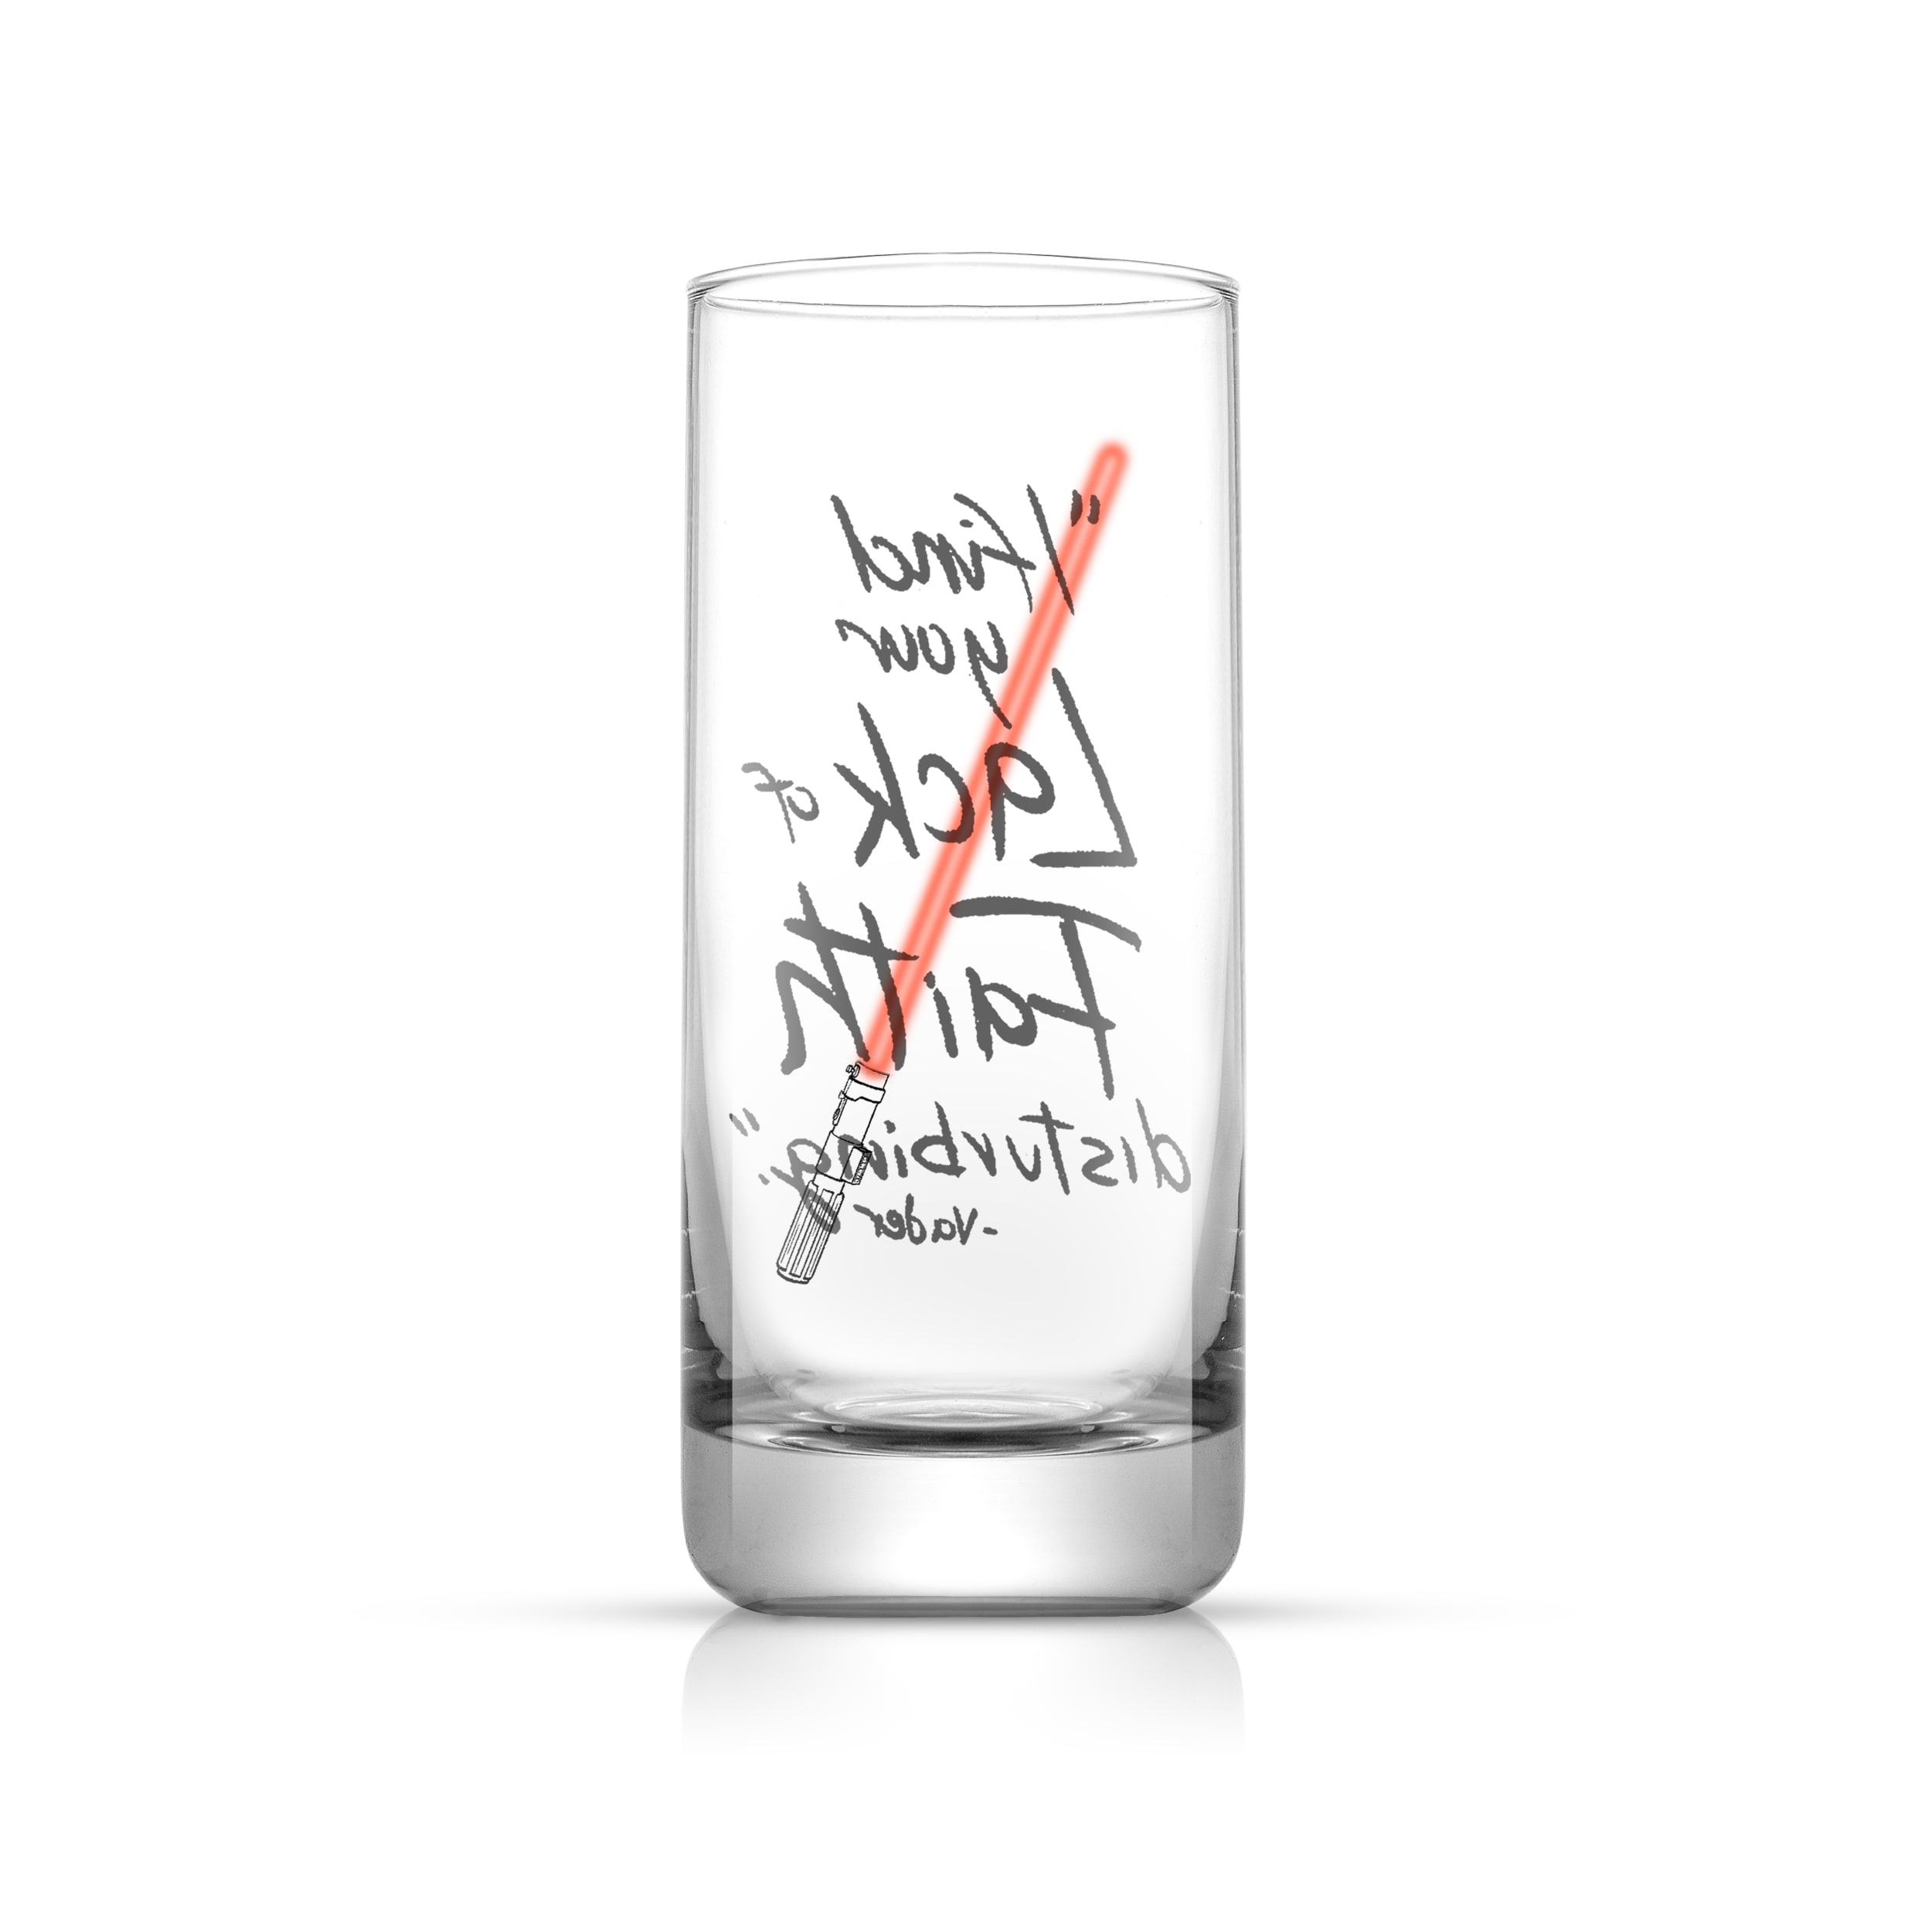 STARWARS Obi-Wan Kenobi 2 Drinking glasses 10oz/295ml JoyJolt